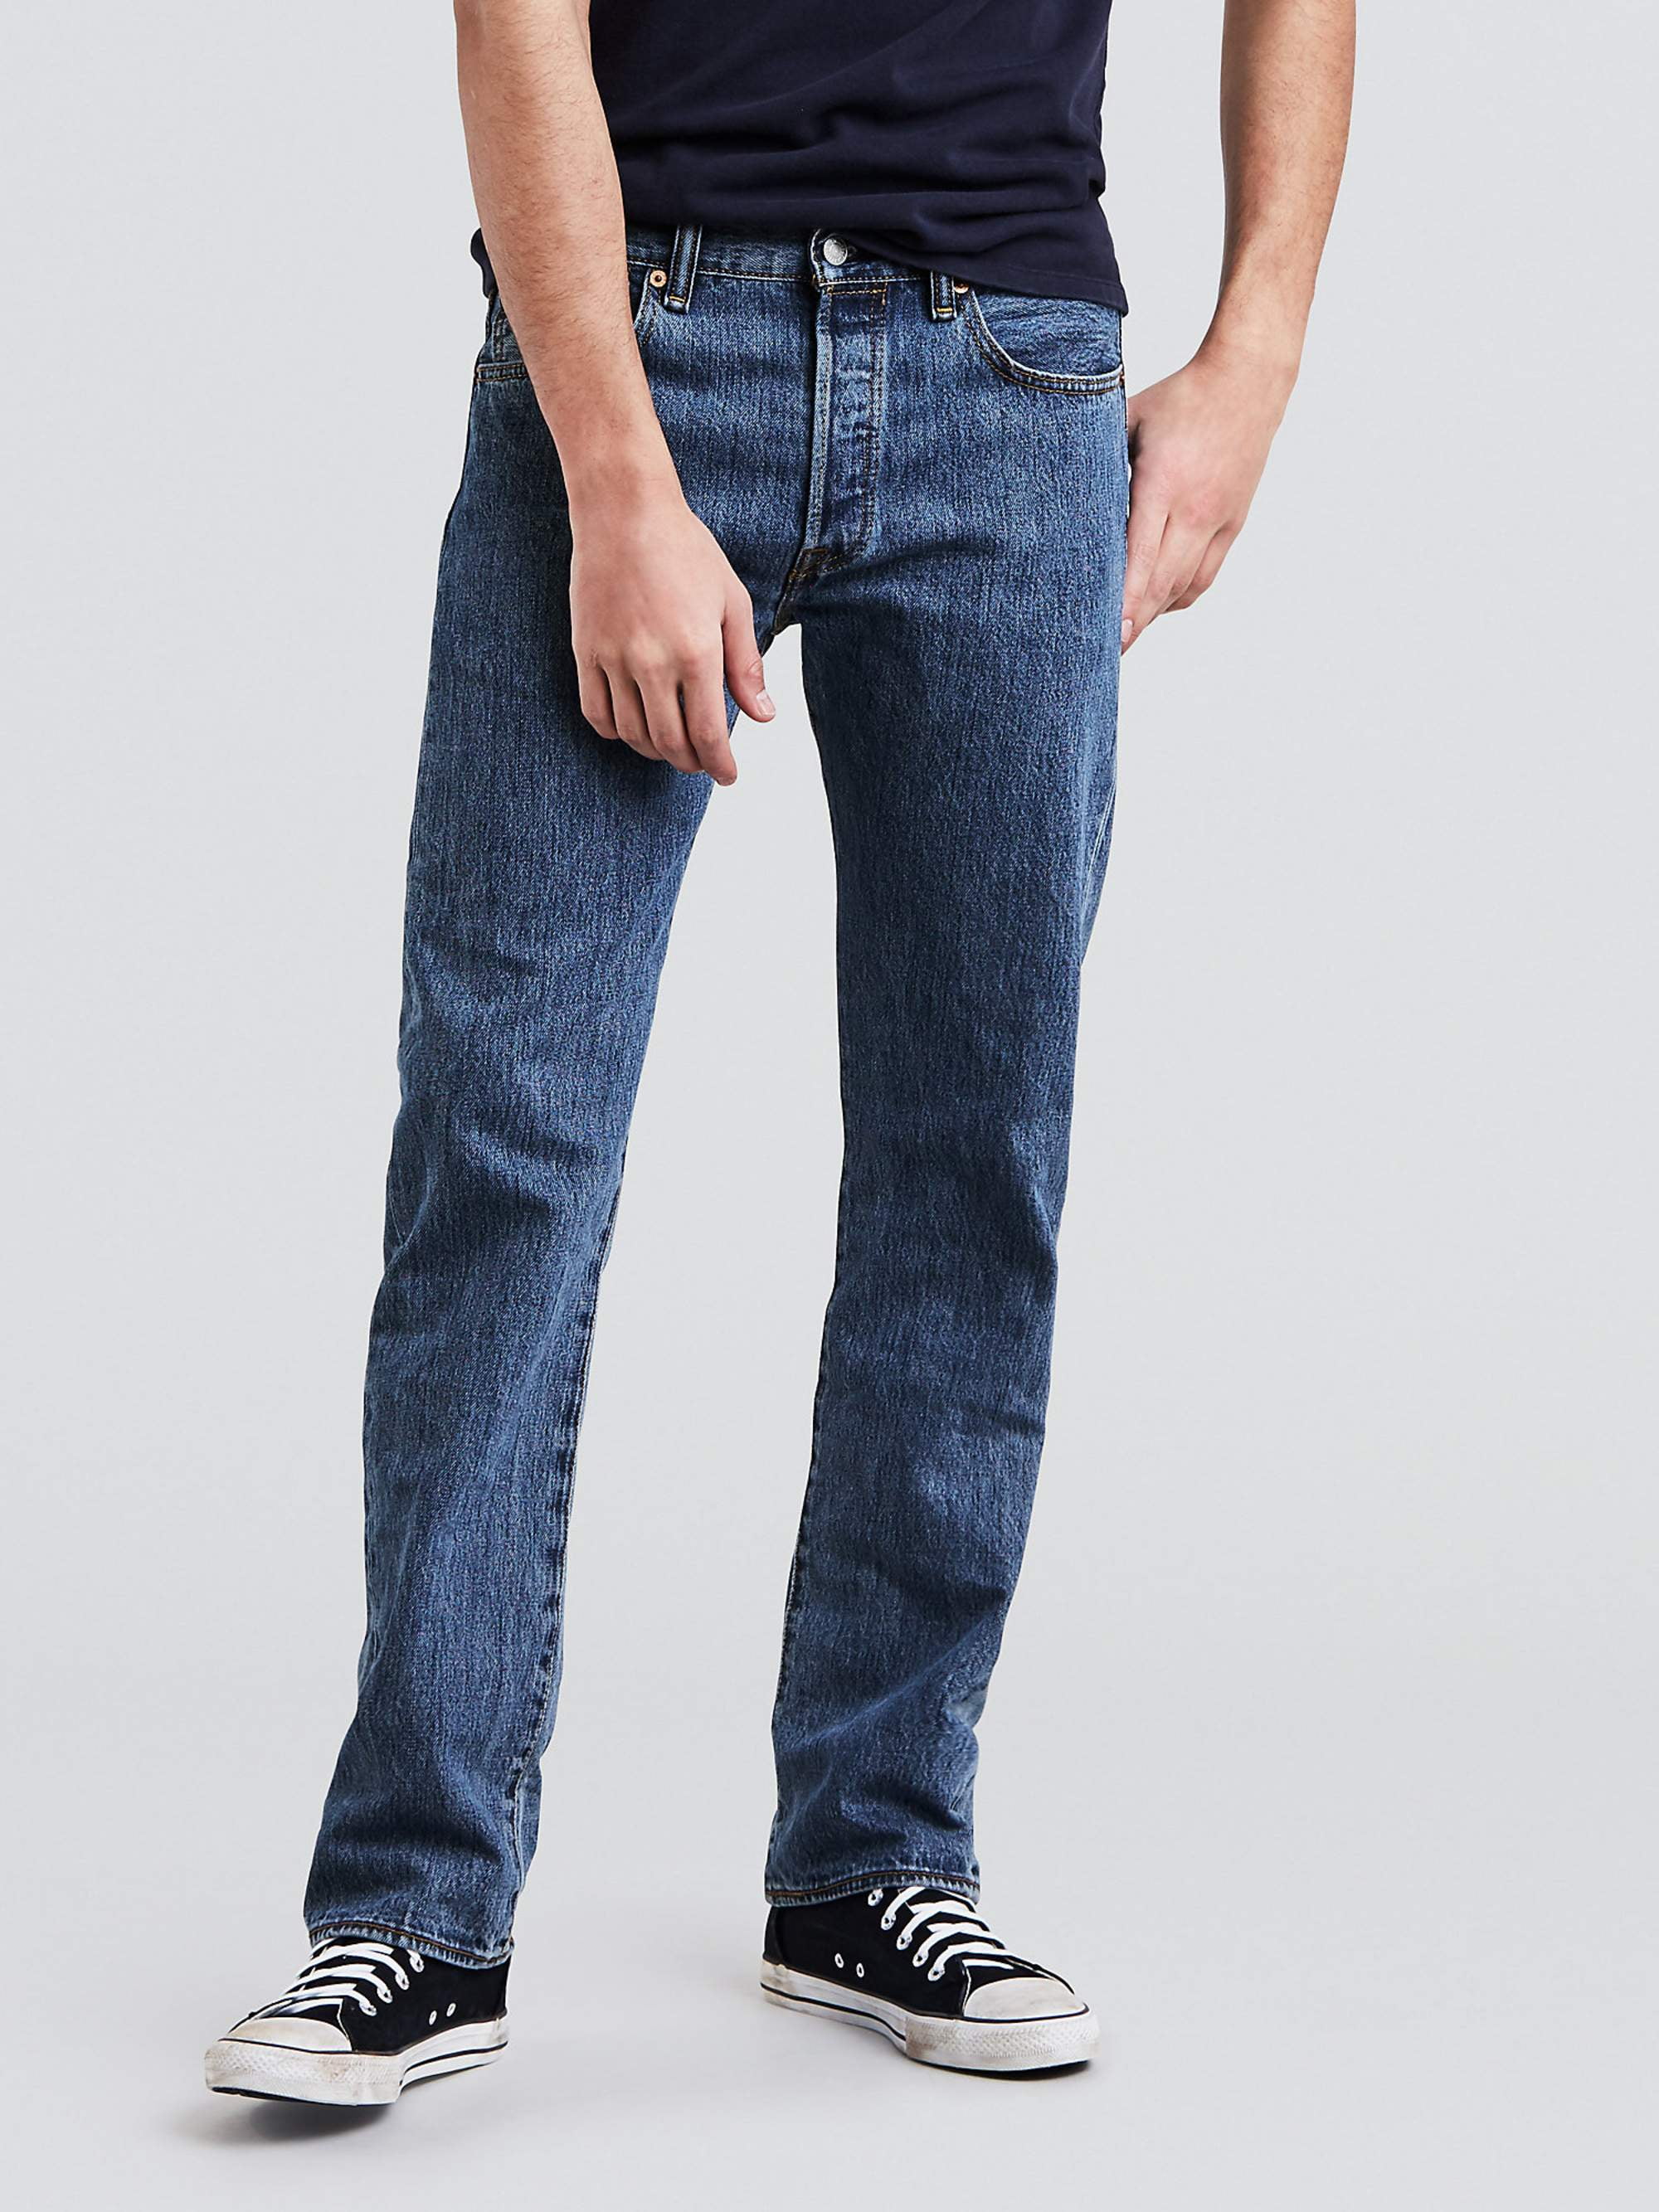 Buy Black Jeans for Men by LEVIS Online | Ajio.com